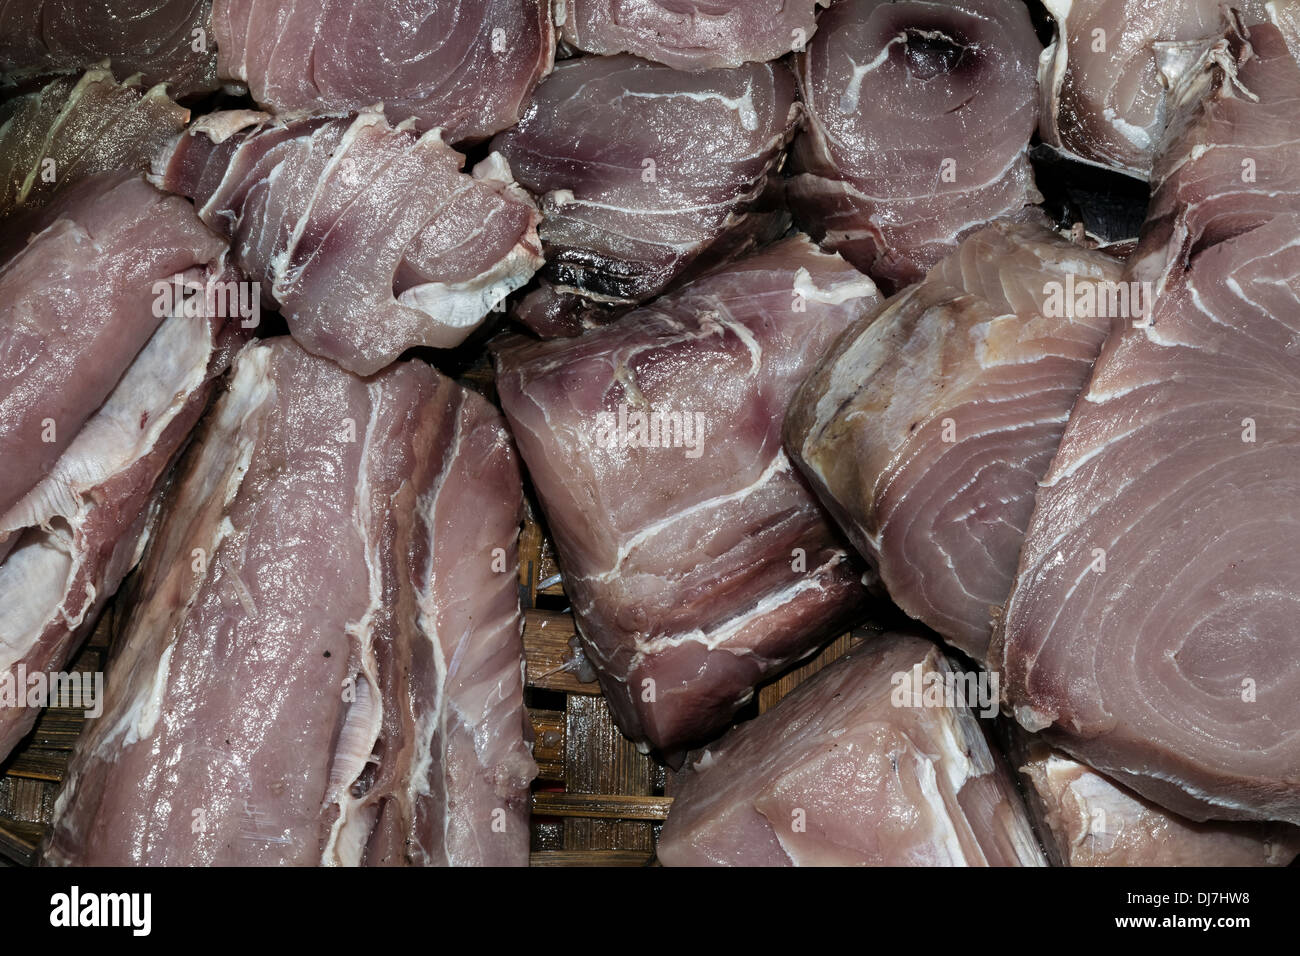 Vietnam, Nha Trang, Dam-Markt, schneiden Fisch Stockfoto